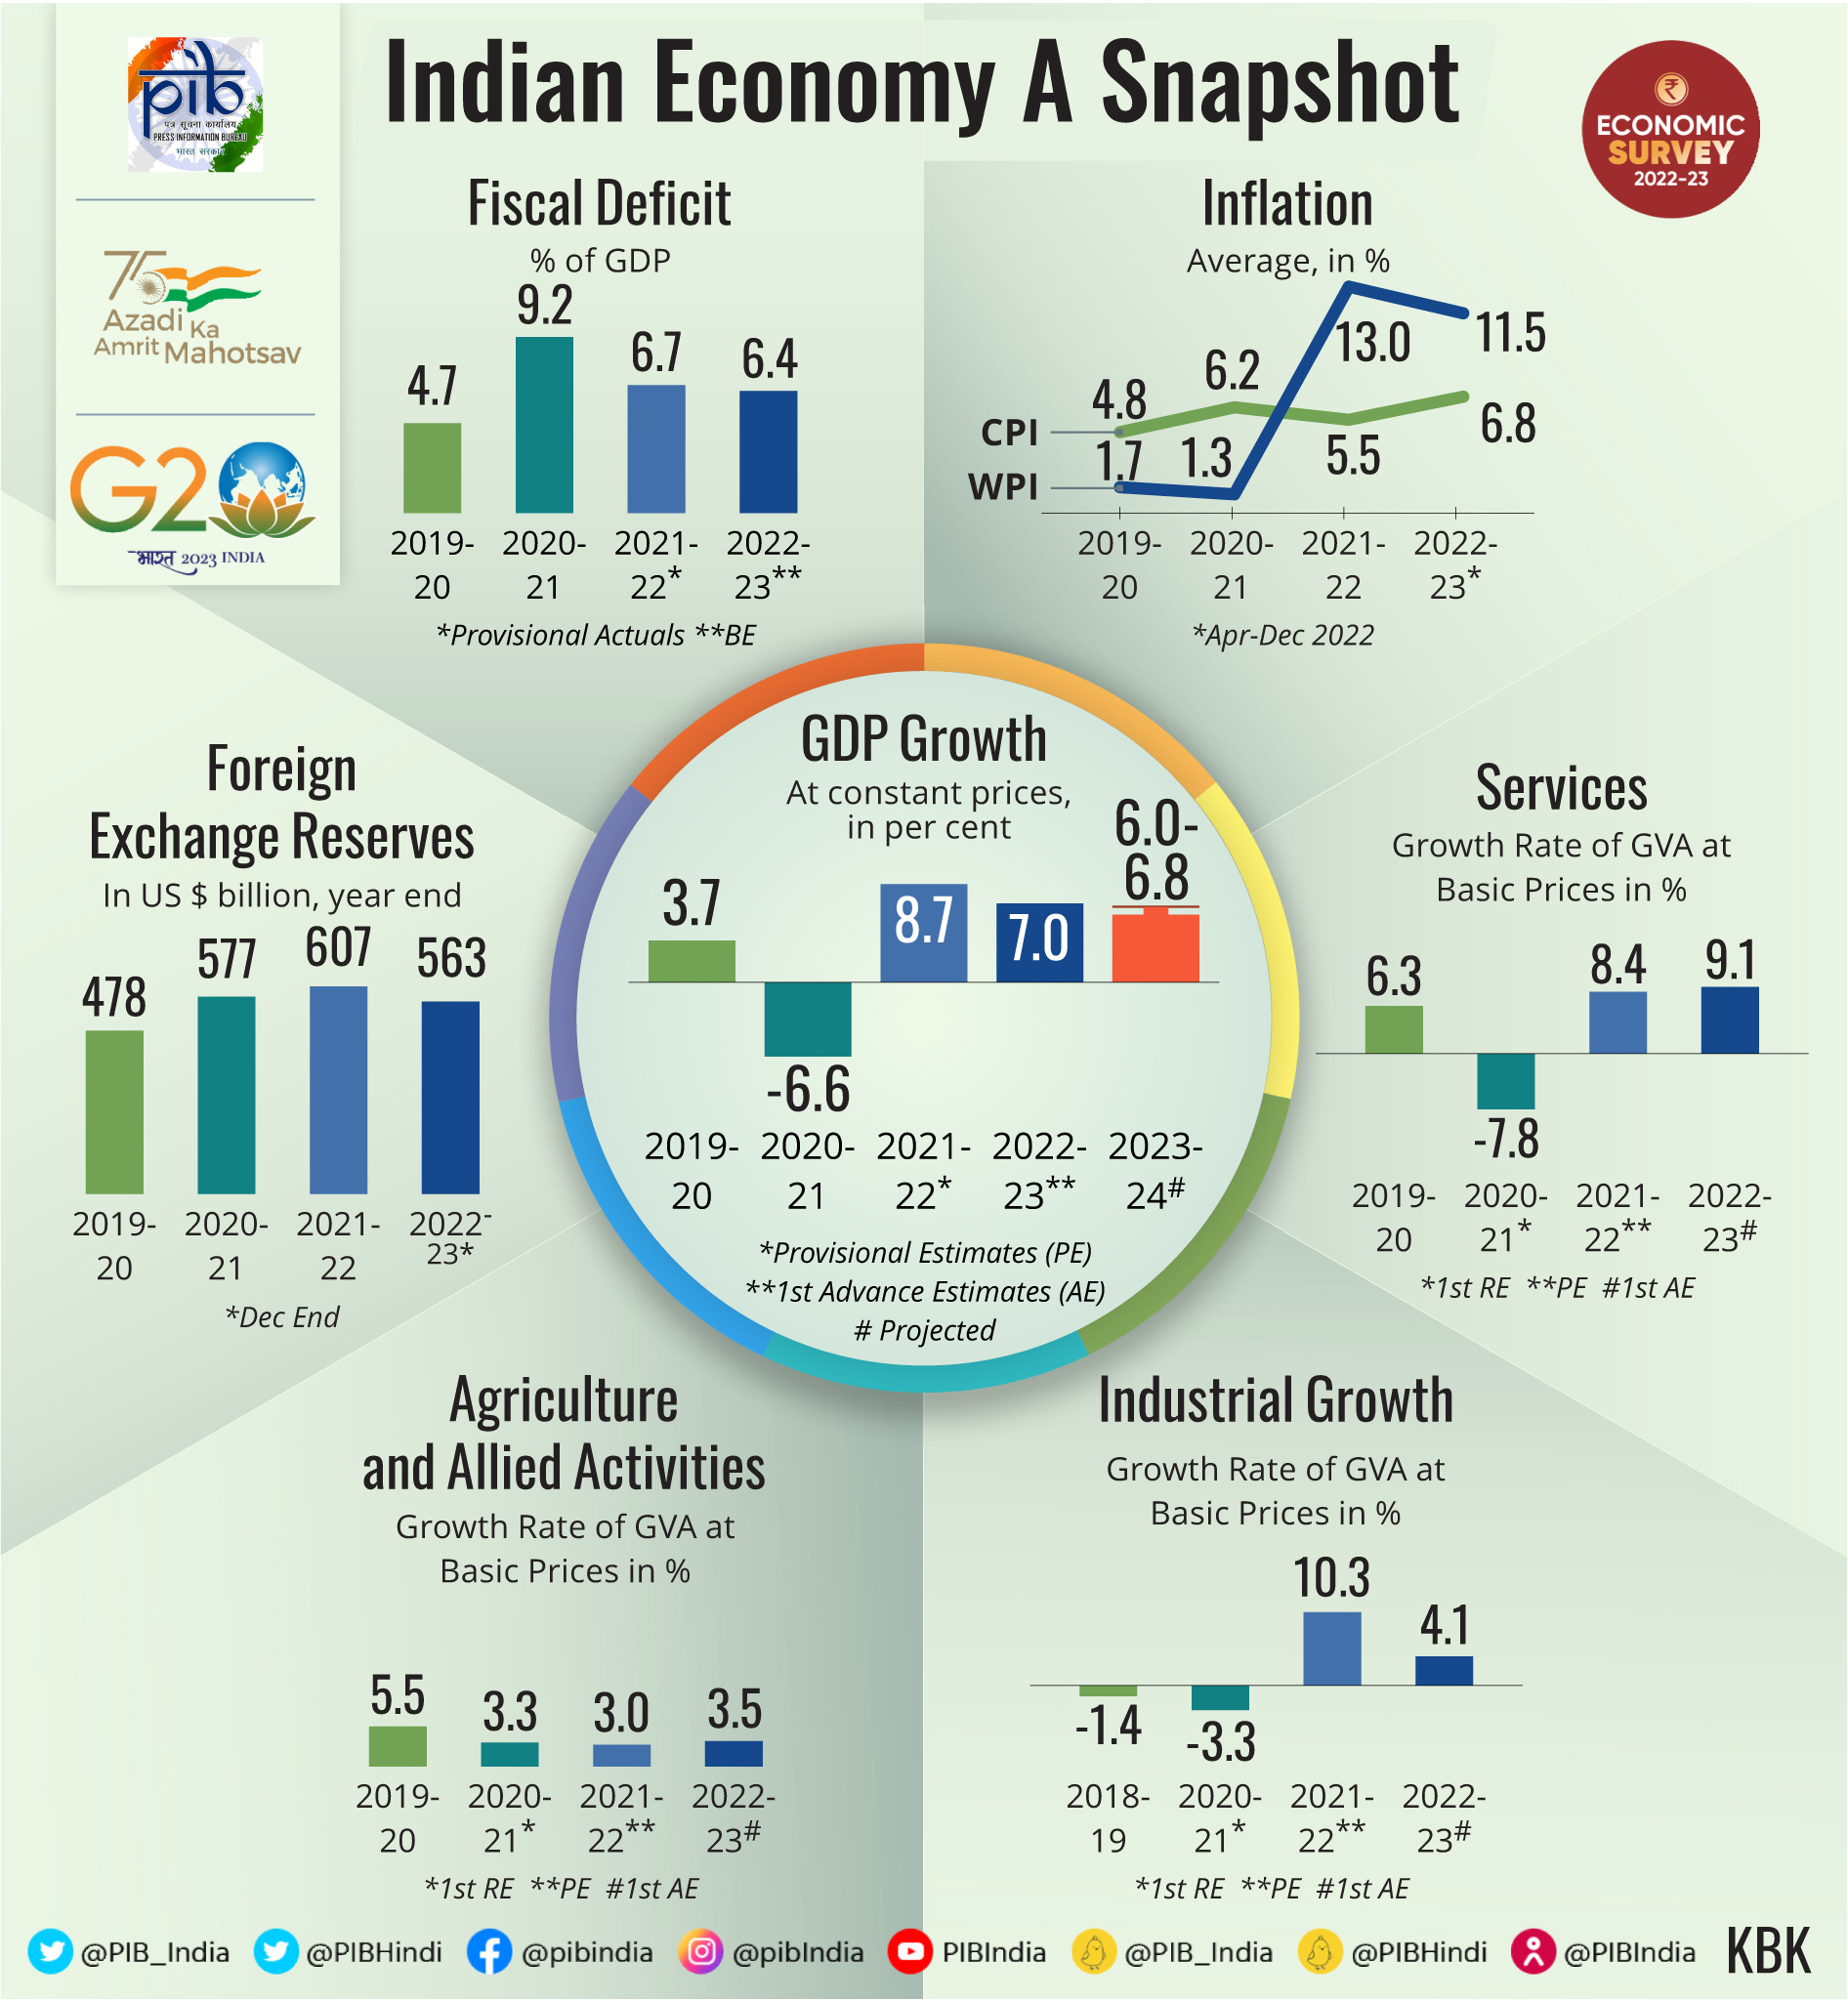 Indian Economy A Snapshot